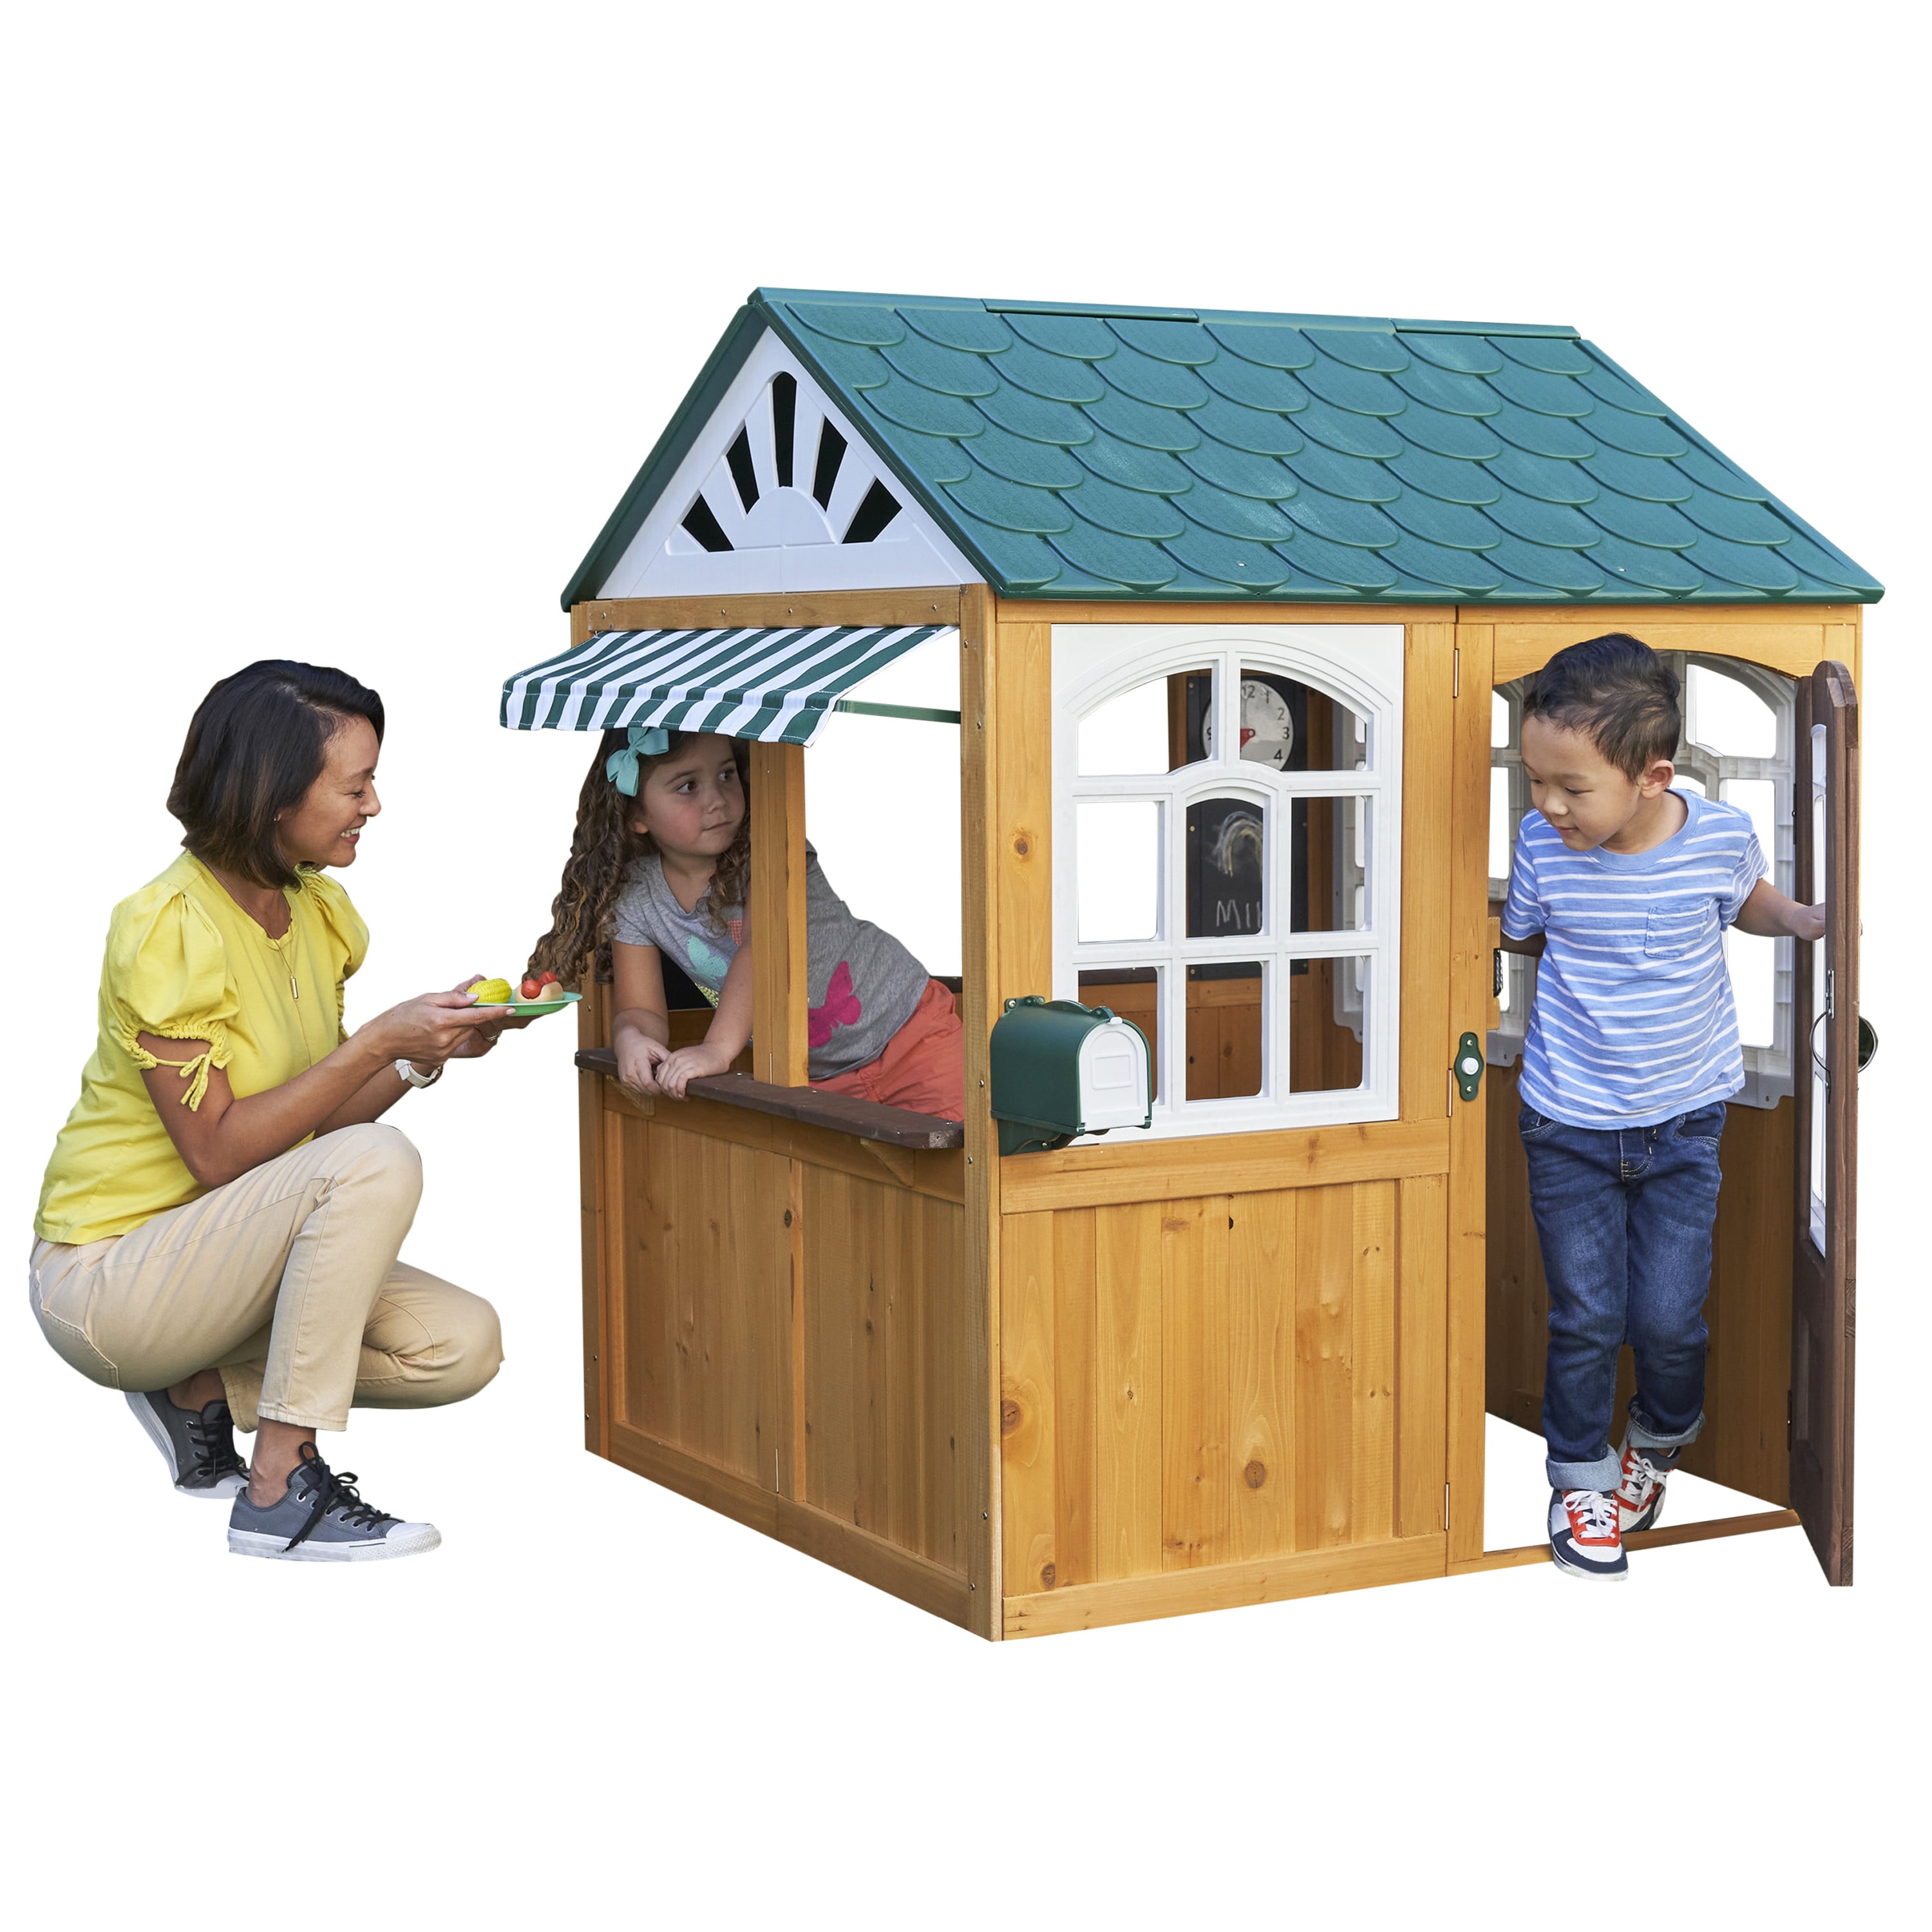 Patio Playhouse Kids Outdoor Fun Play Electronic Doorbell Backyard Area Playing 